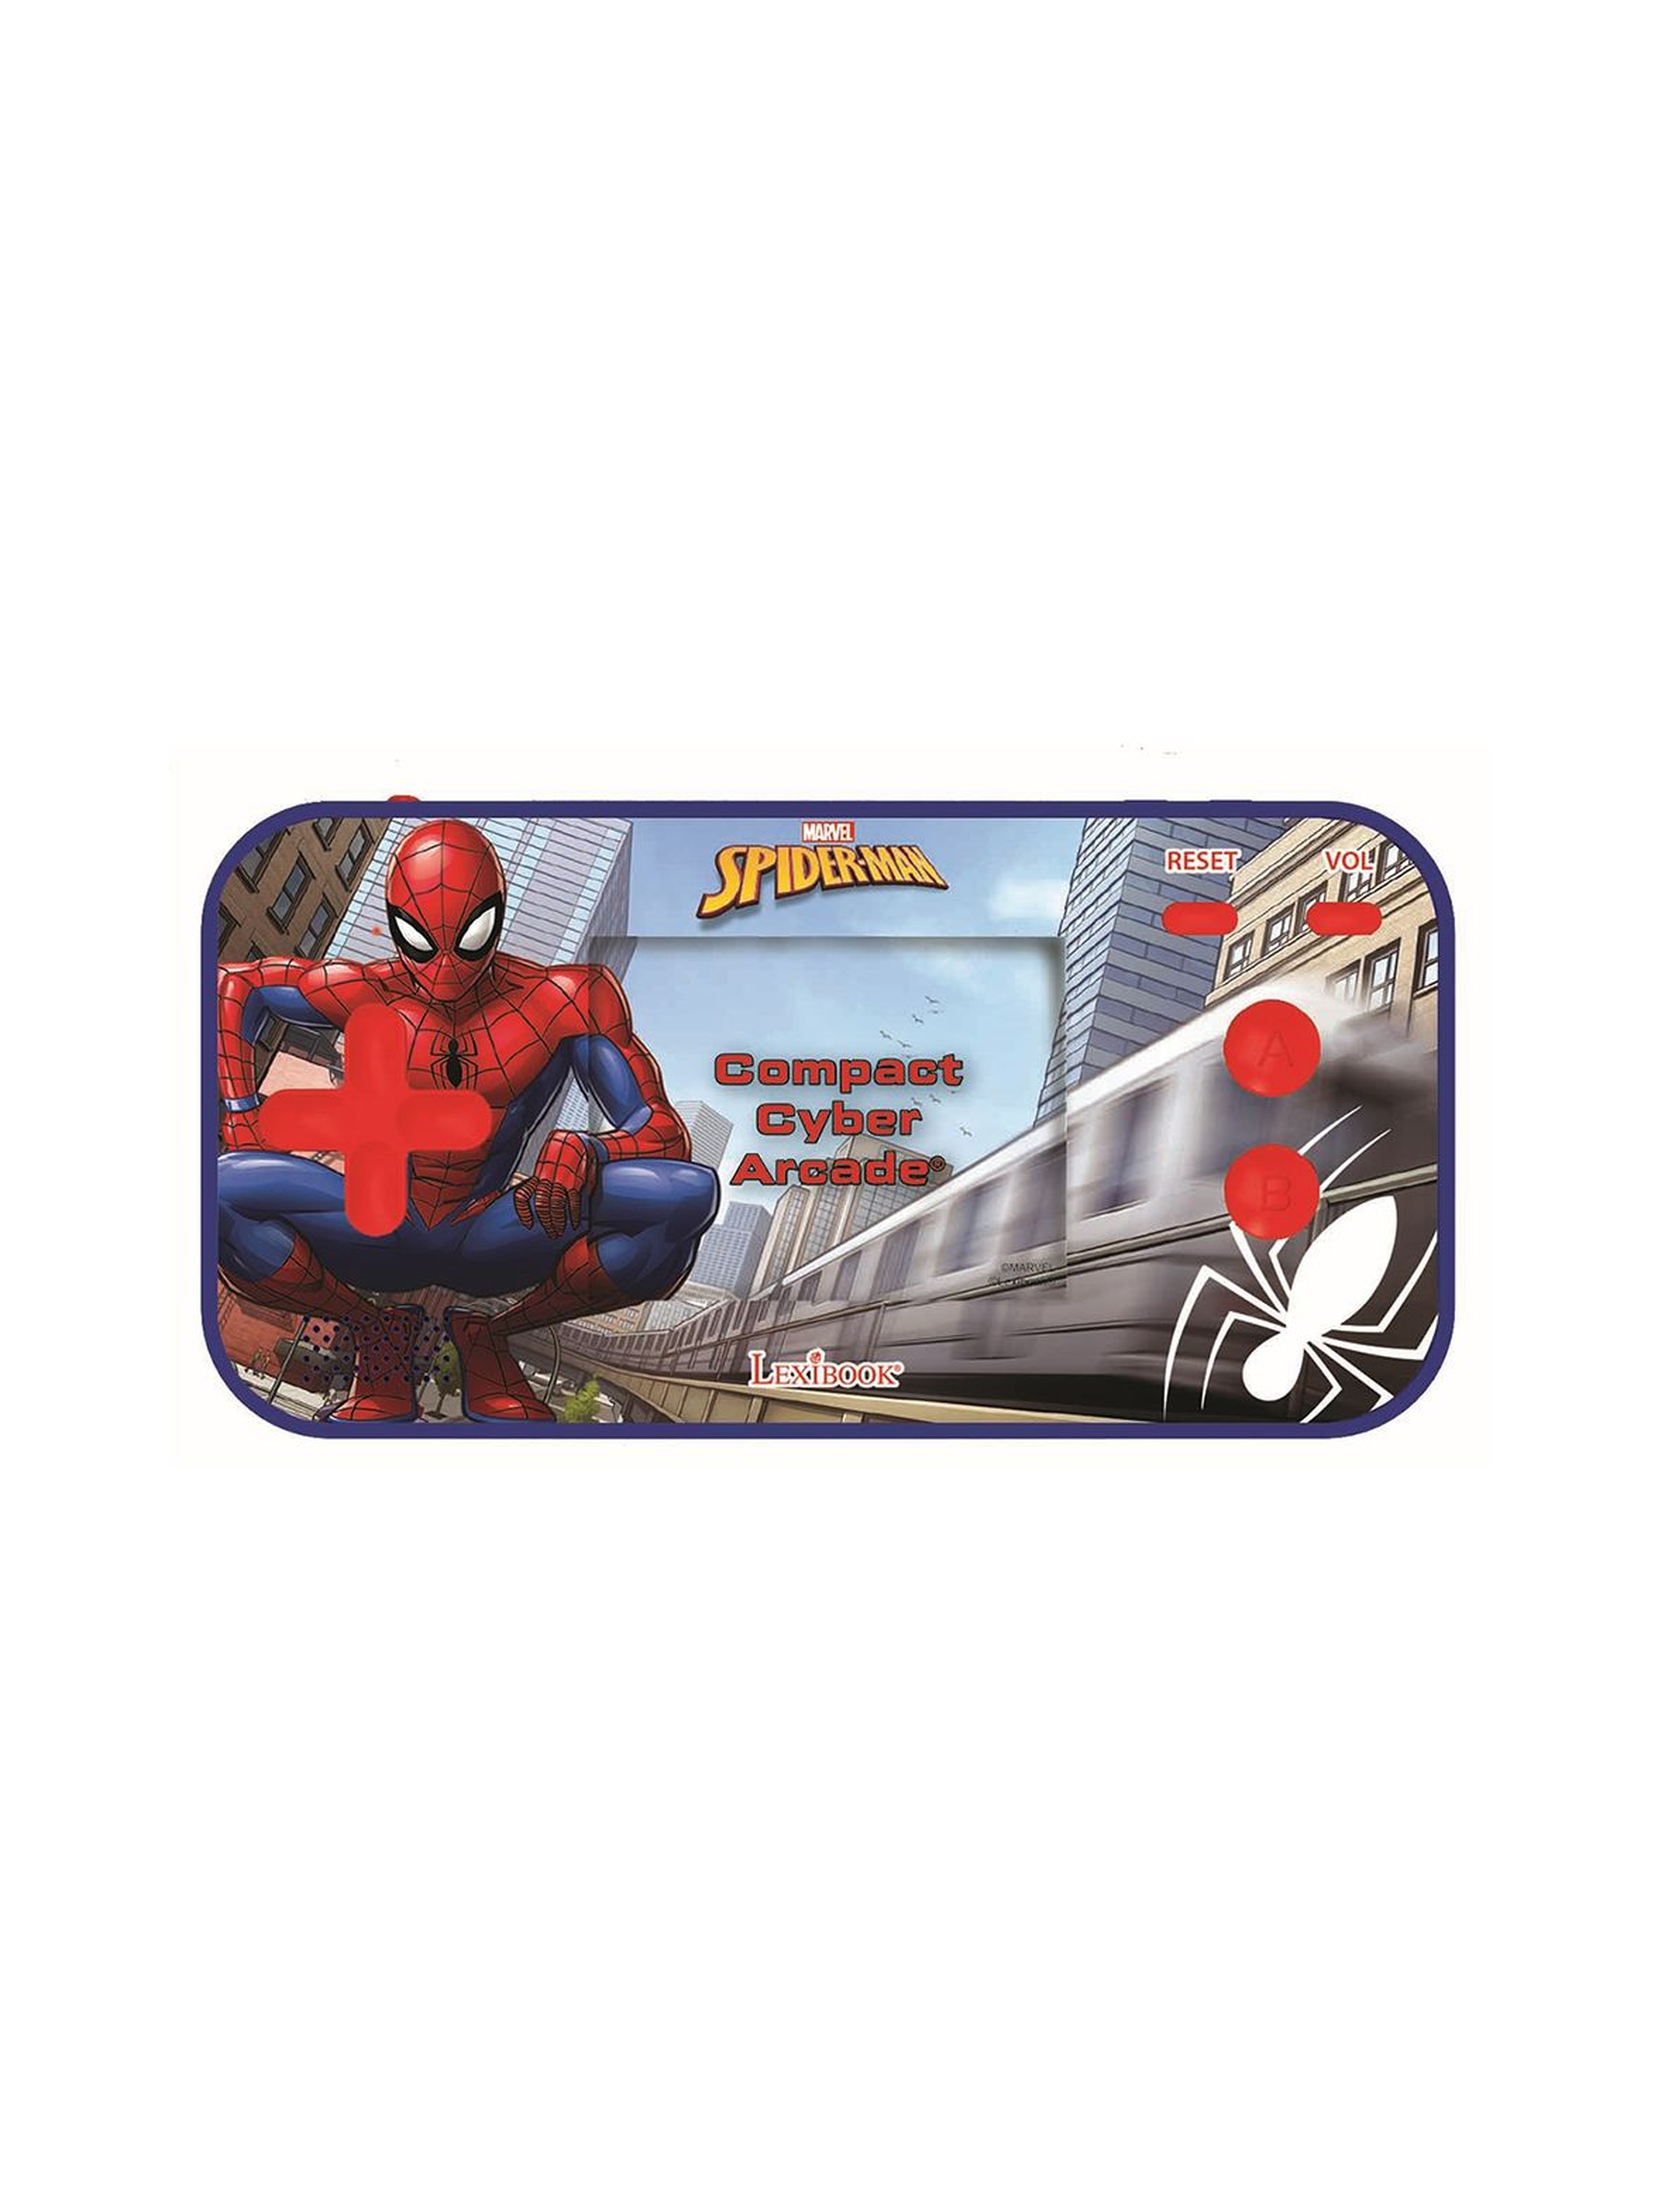 Konsola przenośna Spiderman - 2,5''  150 gier